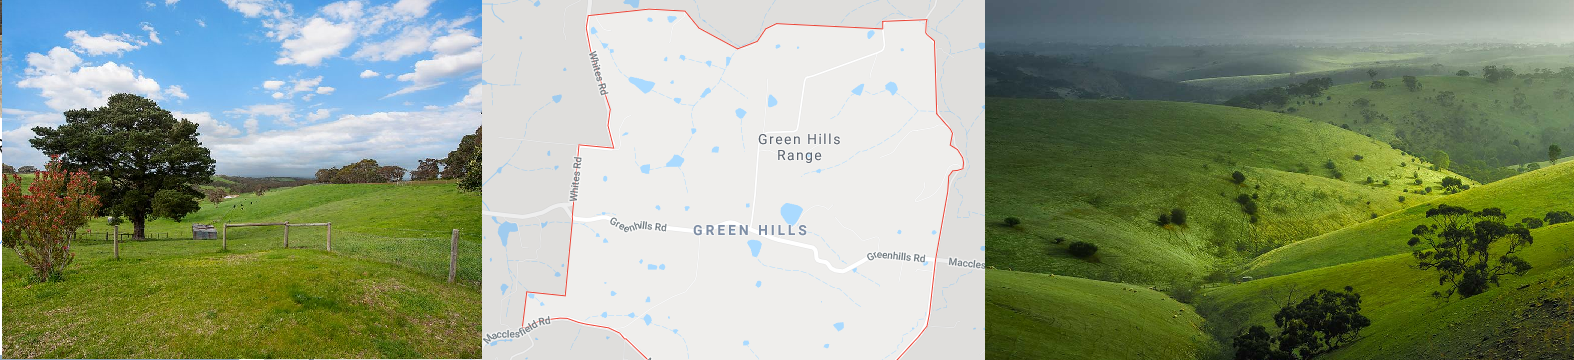 Computer Repairs Green Hills Range